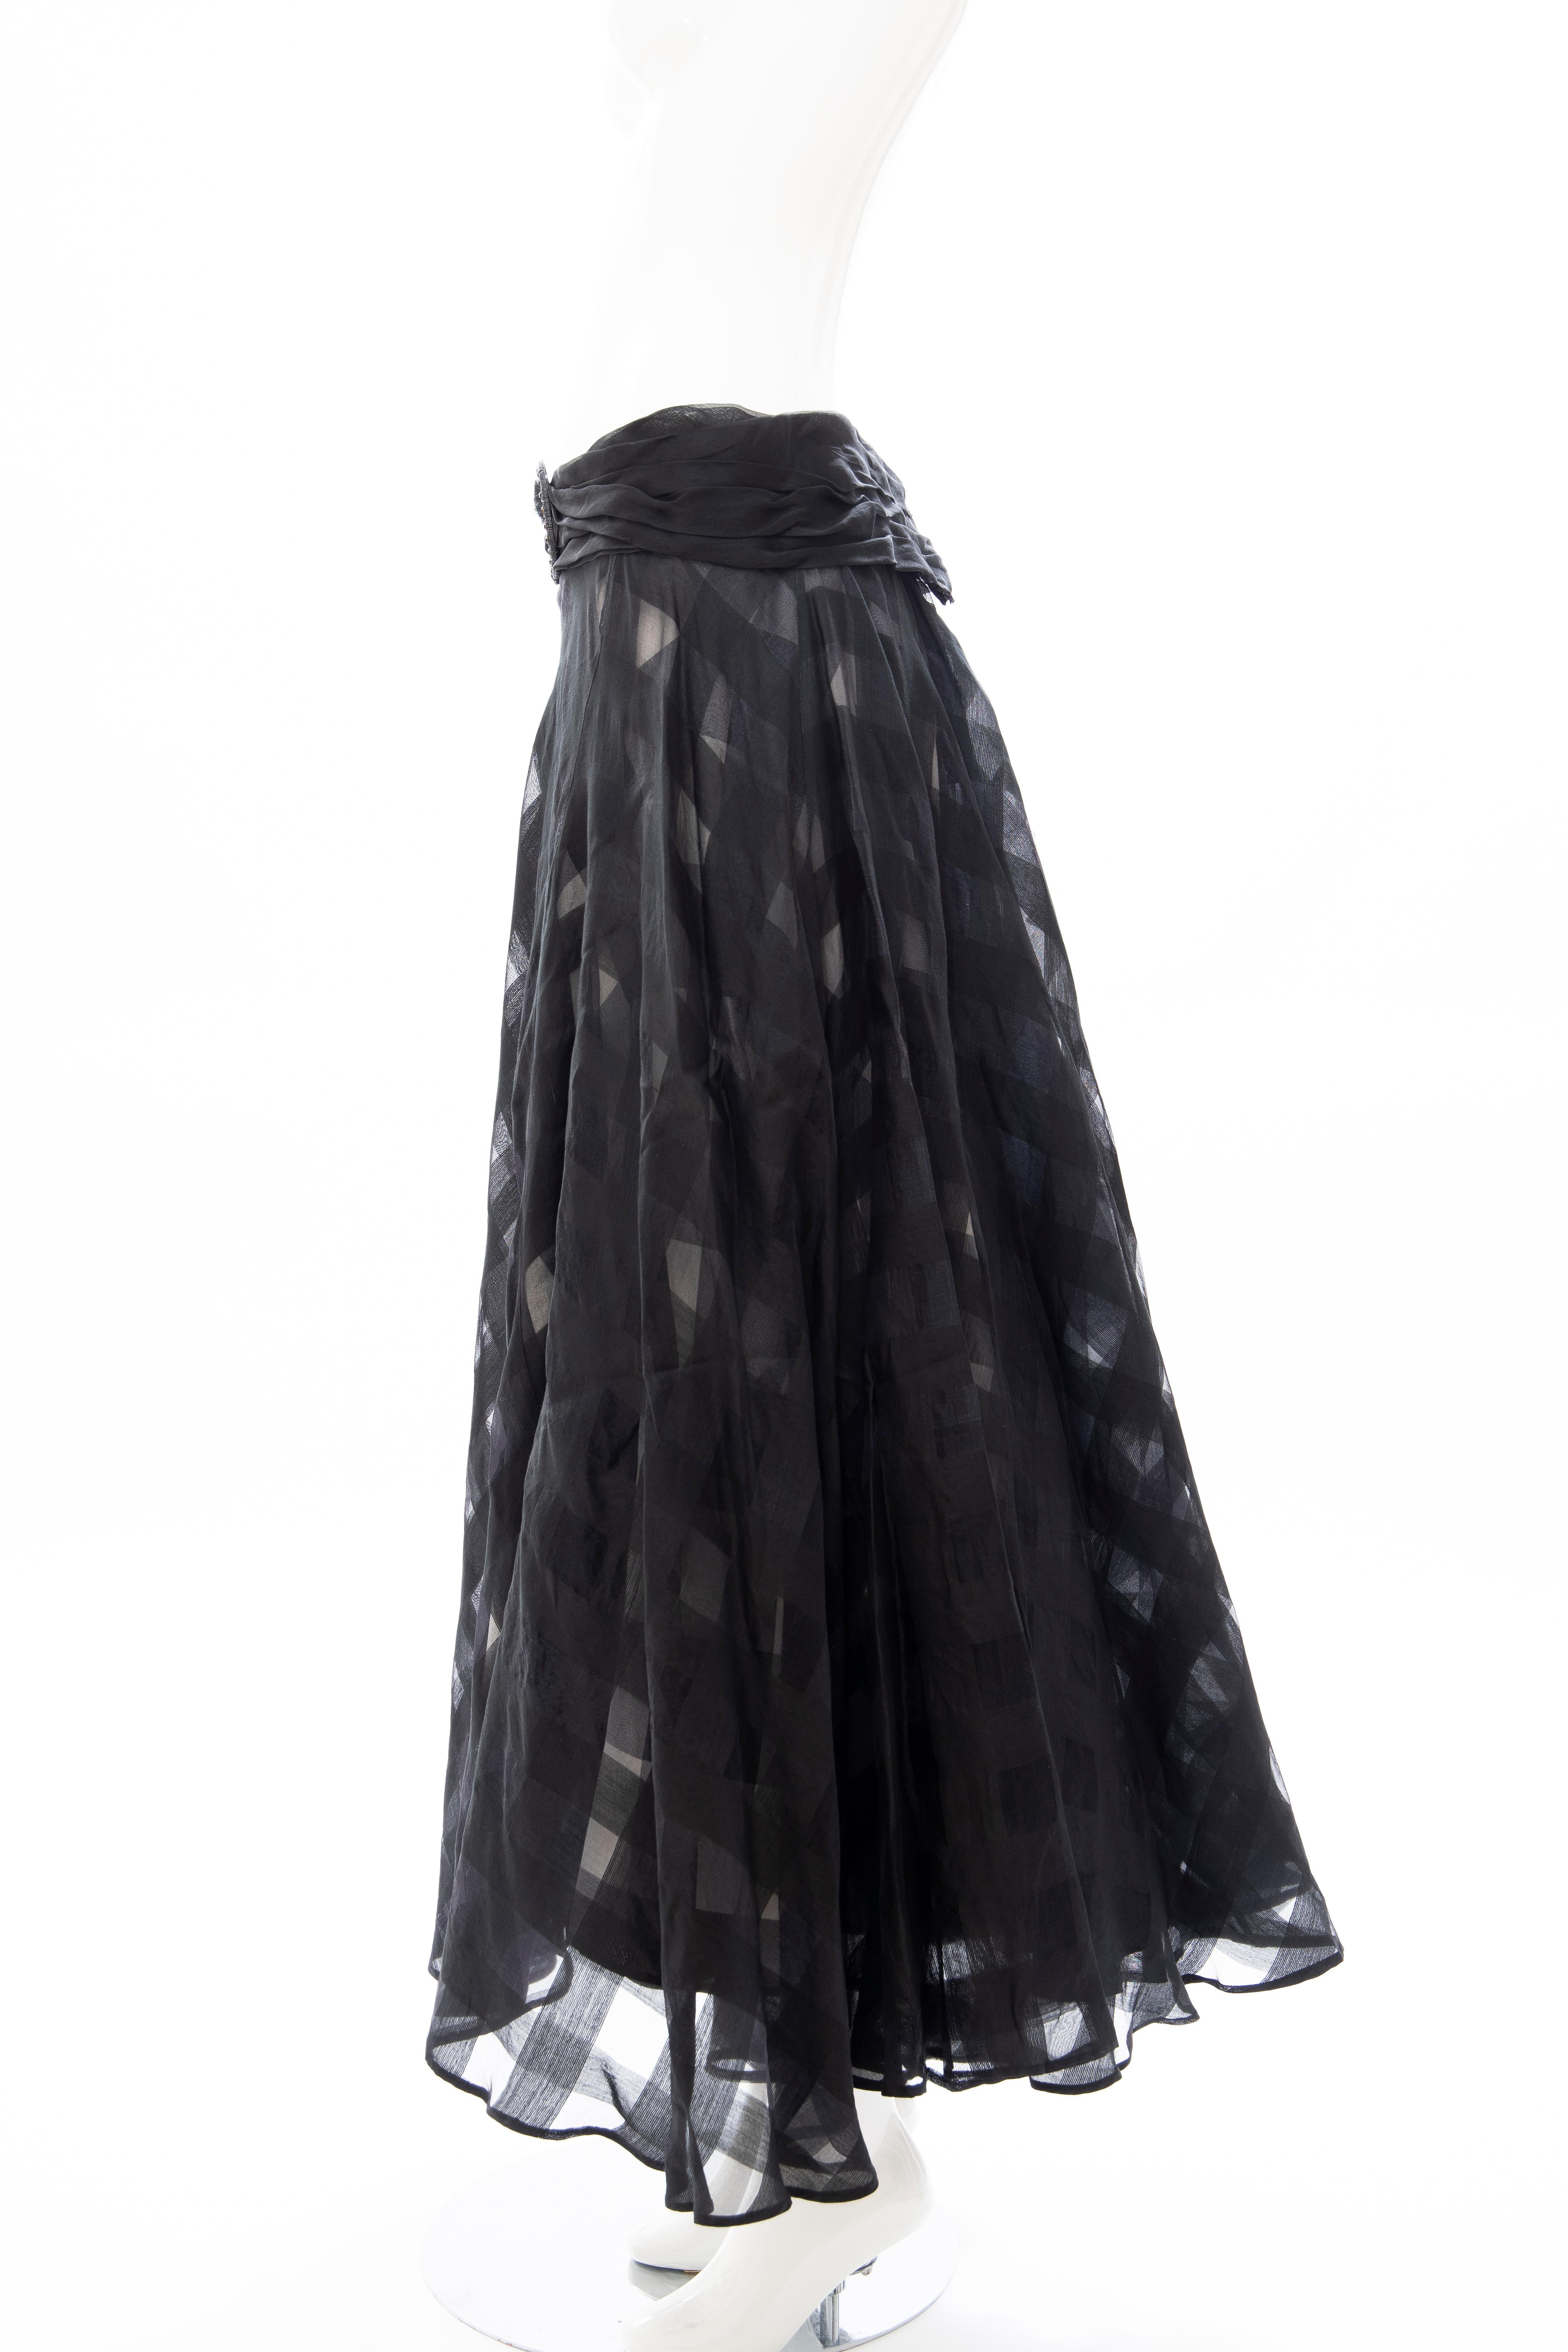 Olivier Theyskens Runway Black Silk Checkerboard Pattern Skirt, Spring 2000 For Sale 9